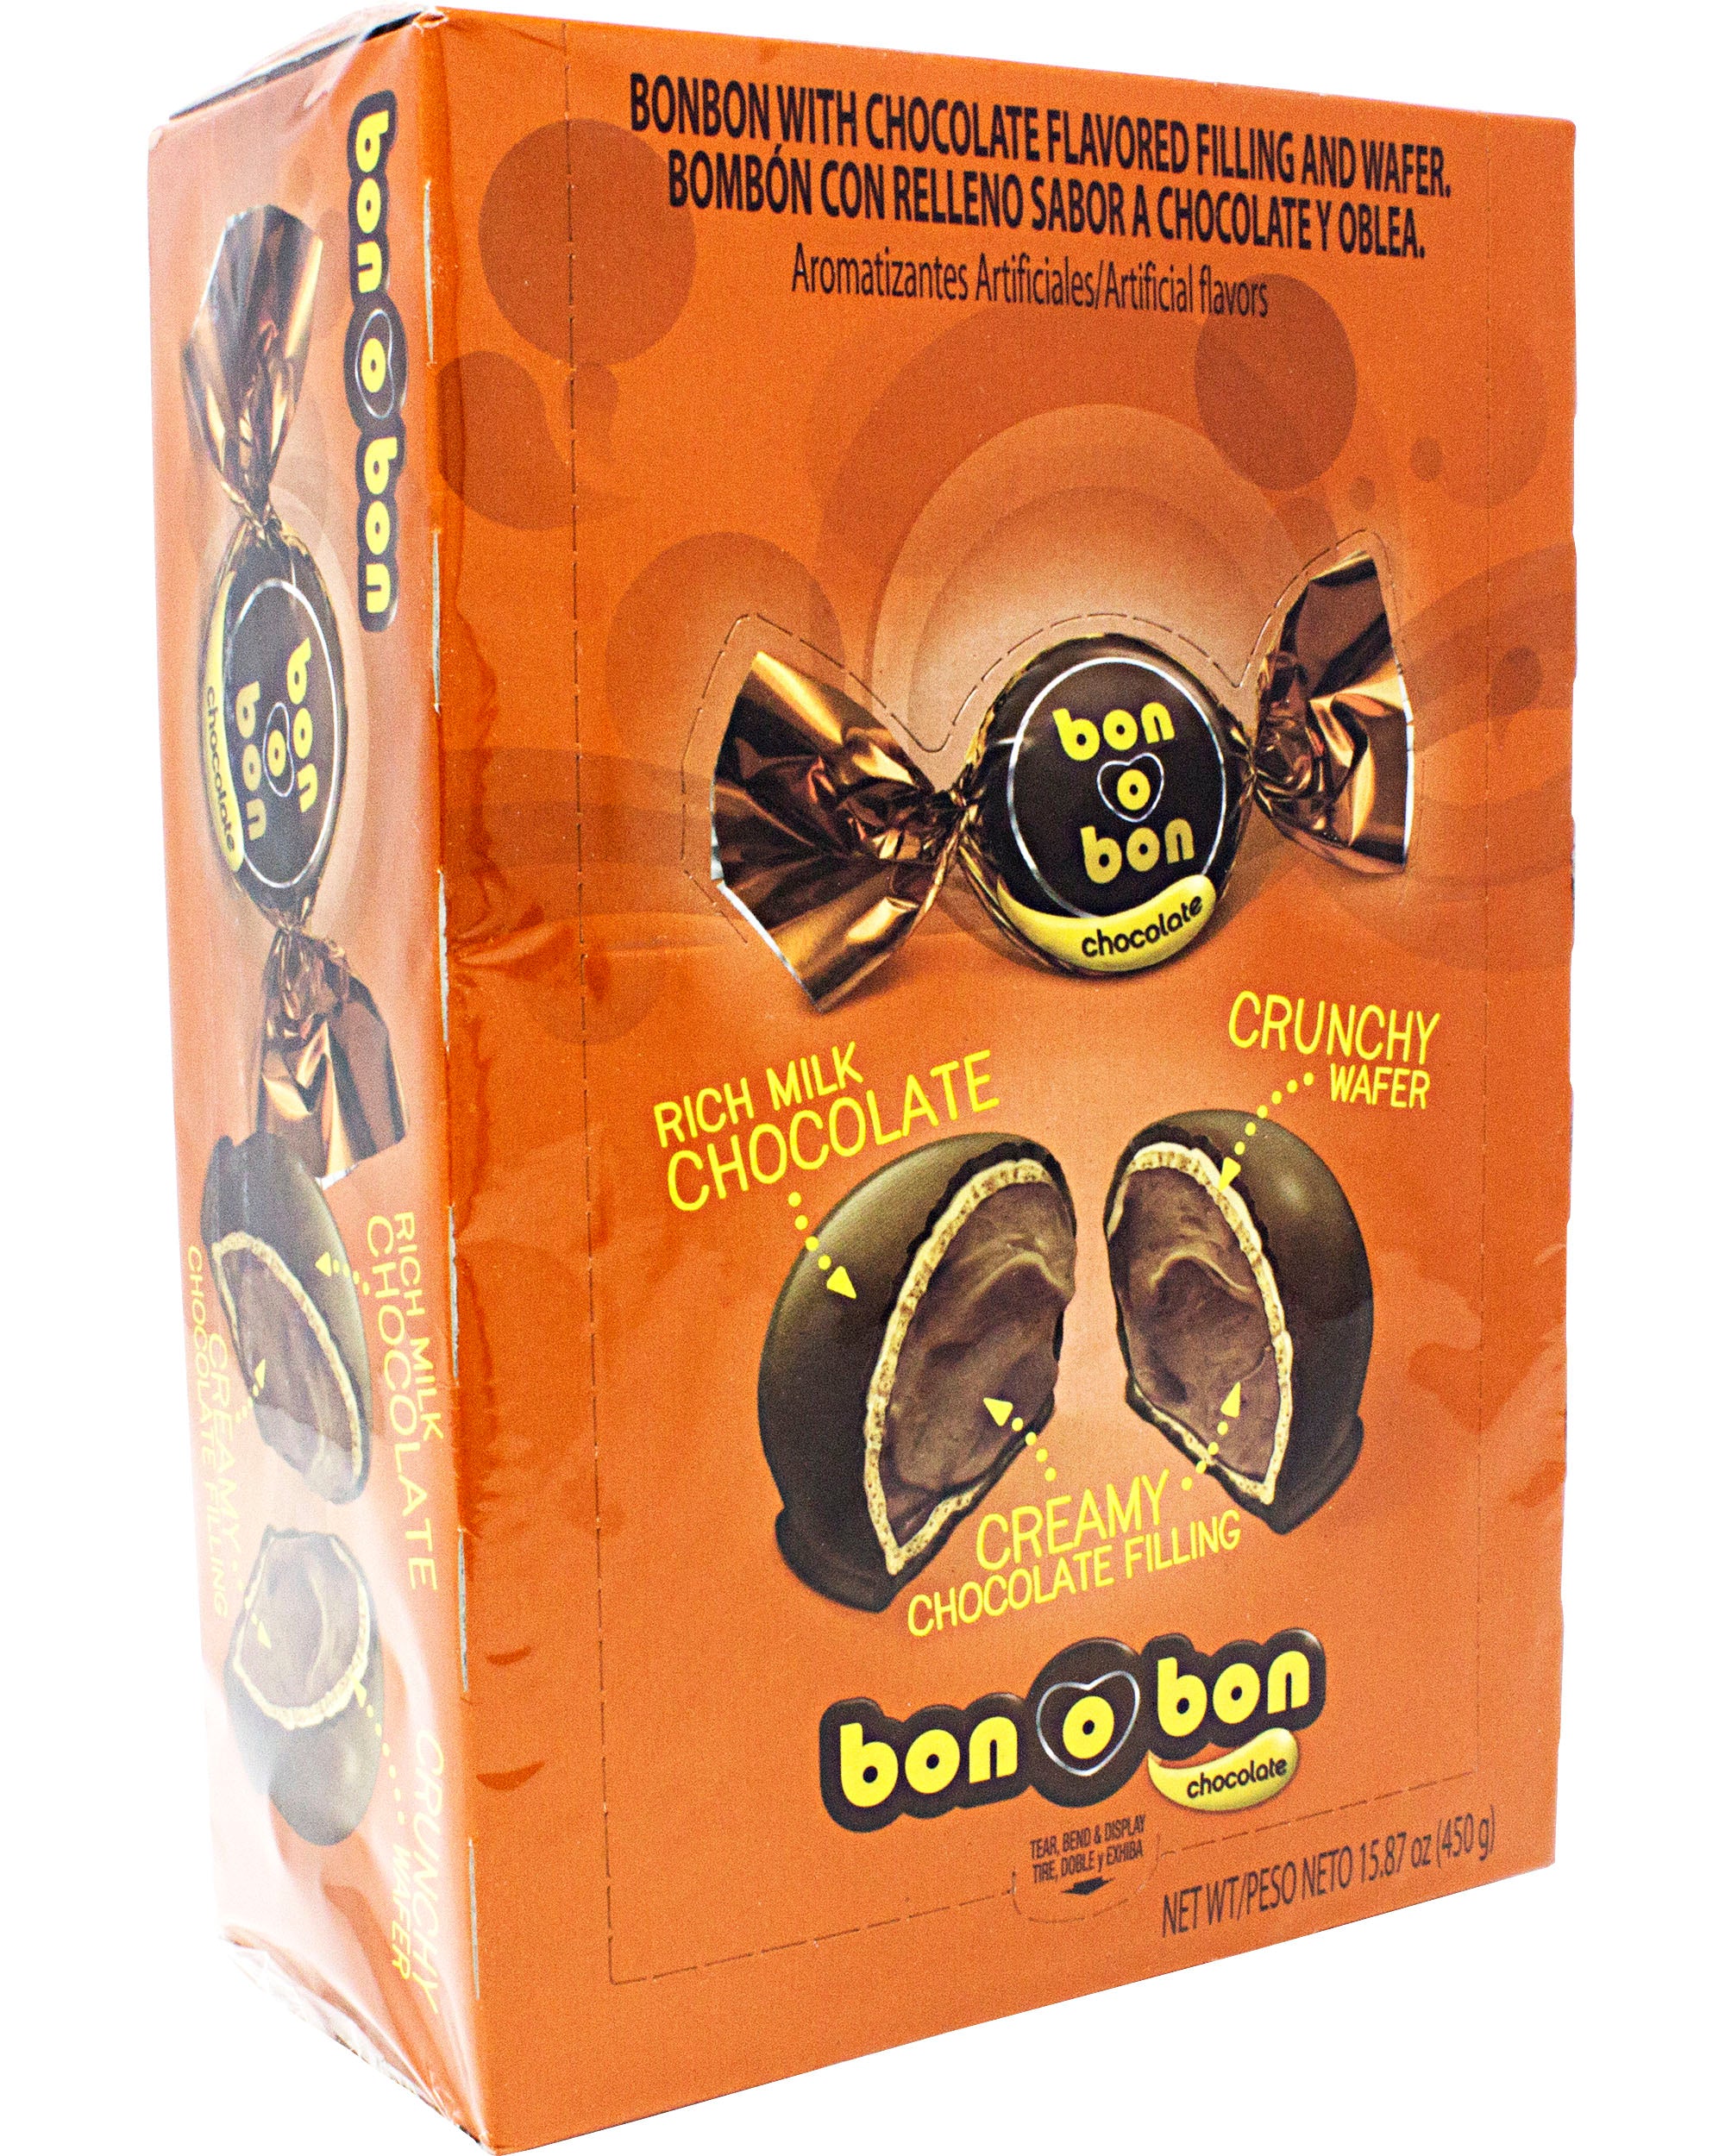 Bon O Bon Bonbons with Peanut Cream Filling and Wafer